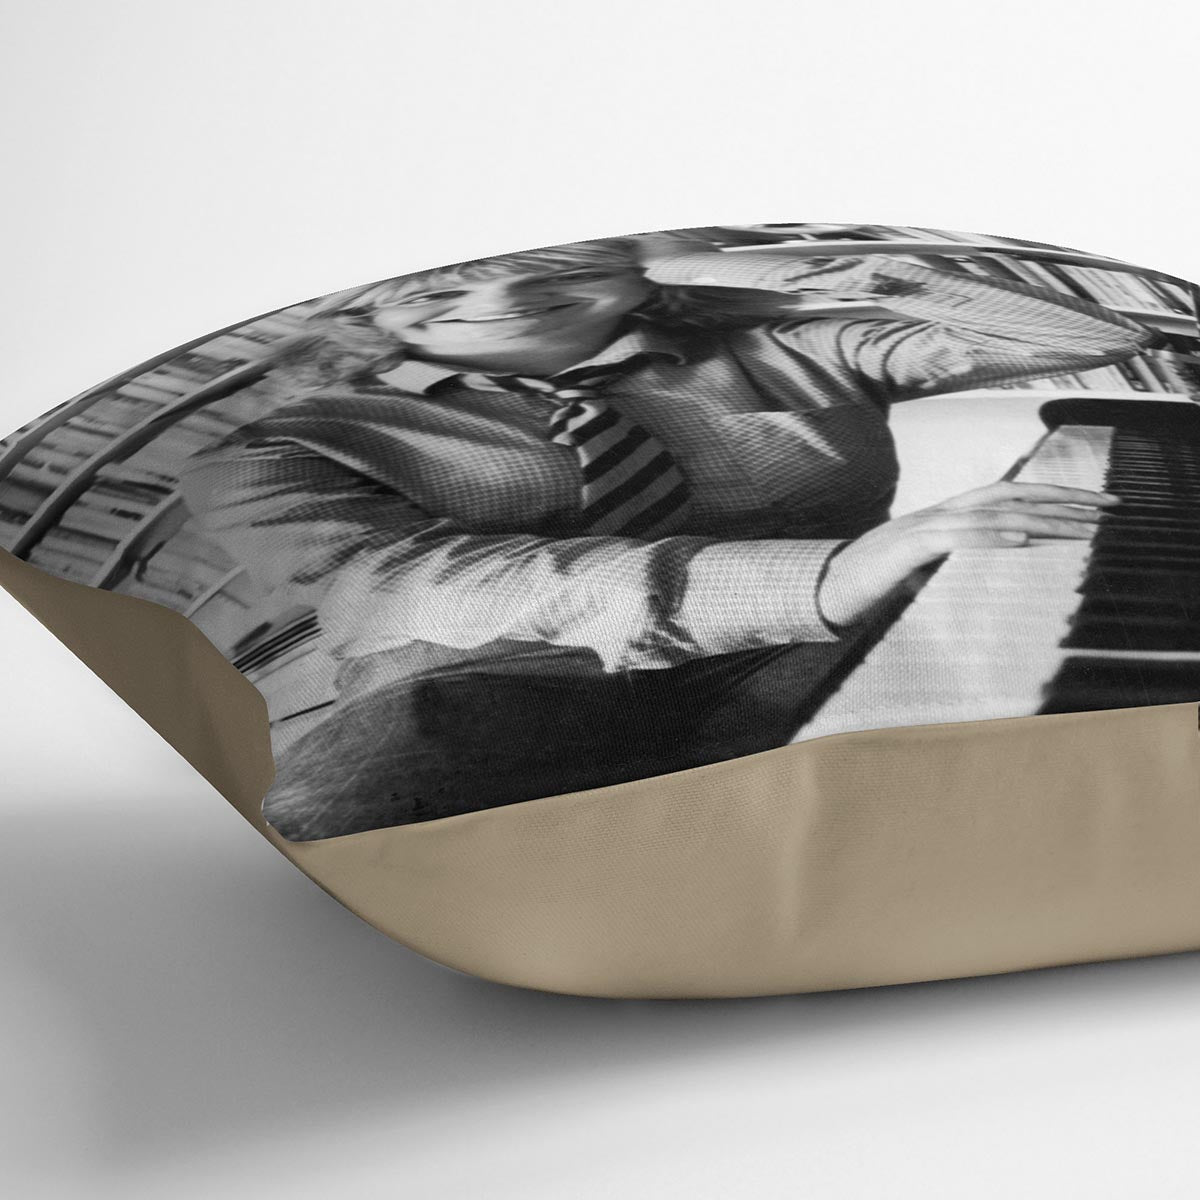 Victoria Wood at the piano Cushion